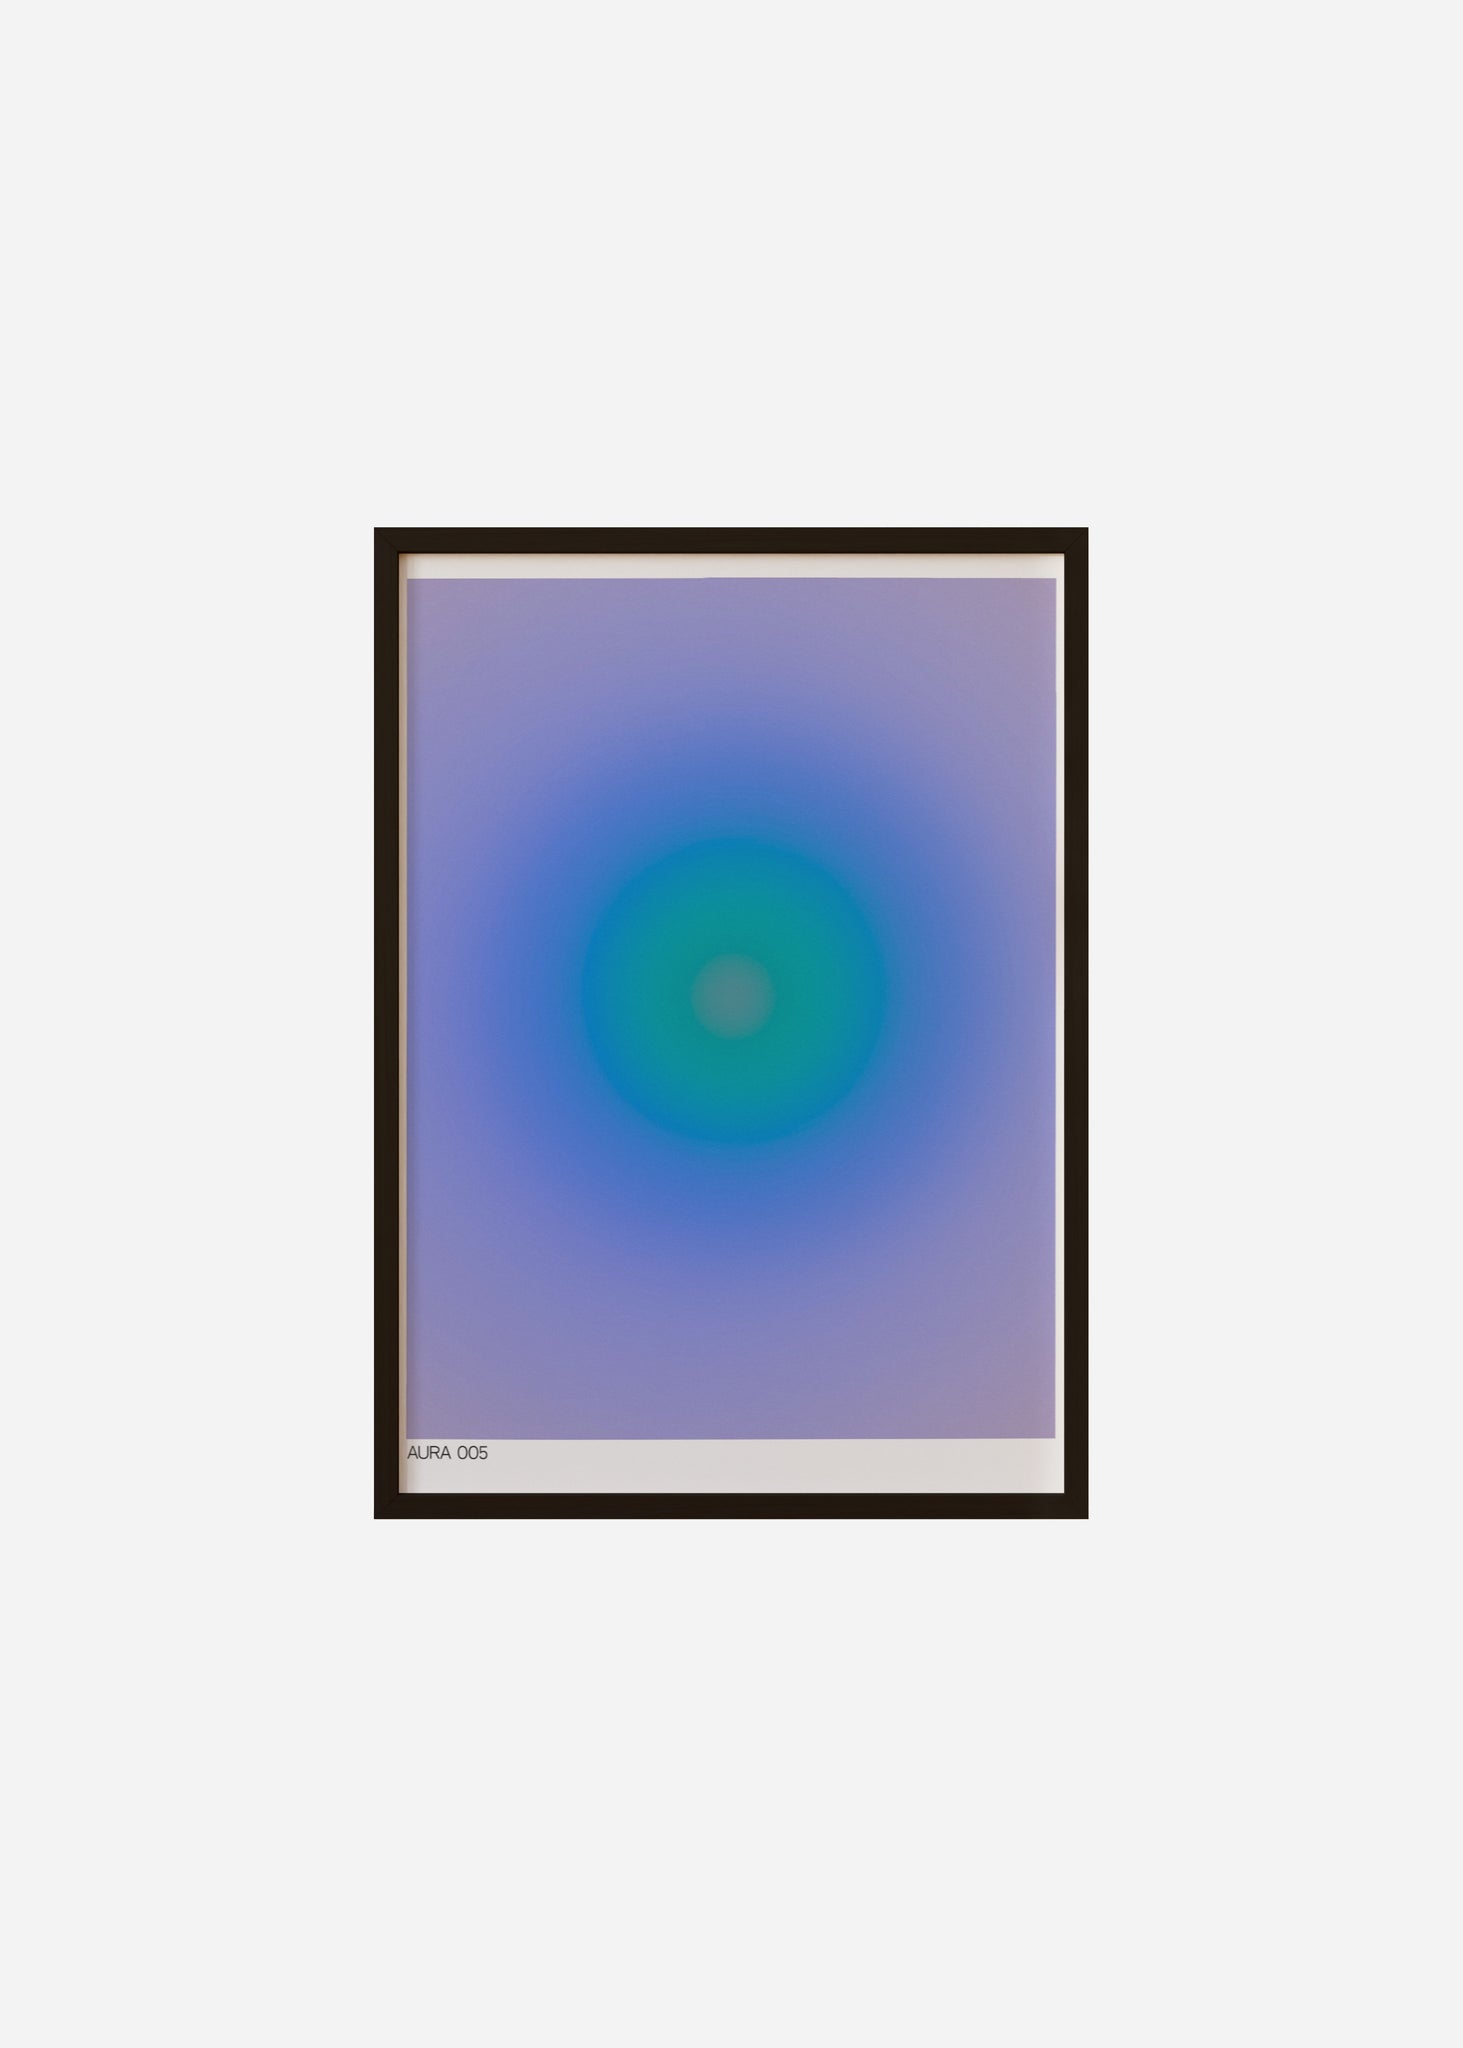 aura 005 Framed Print